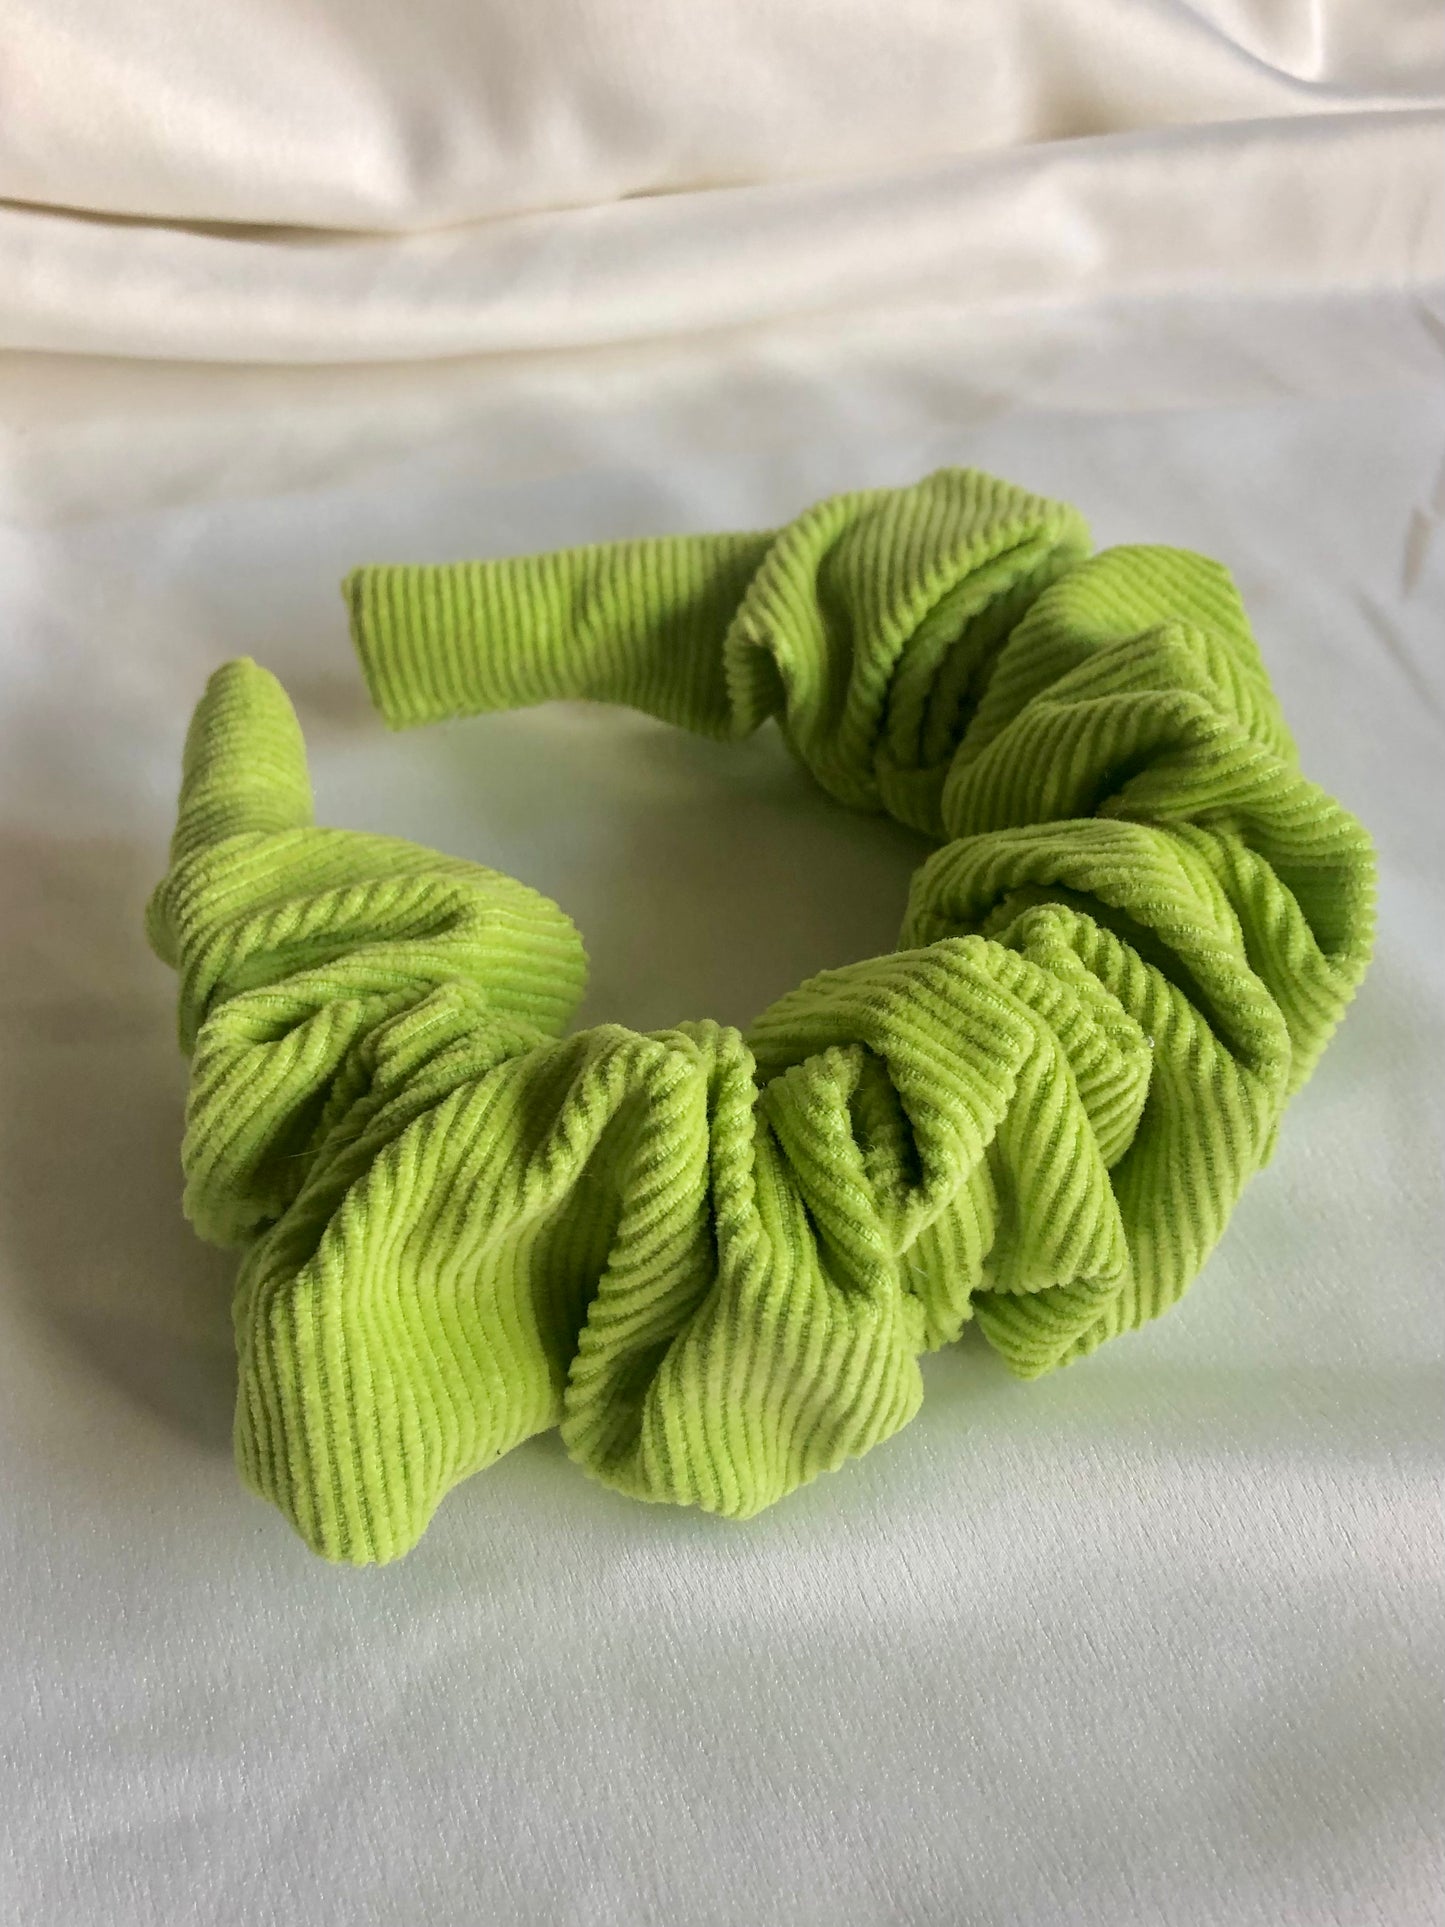 Pisco Lime Green Cord headband - choose style